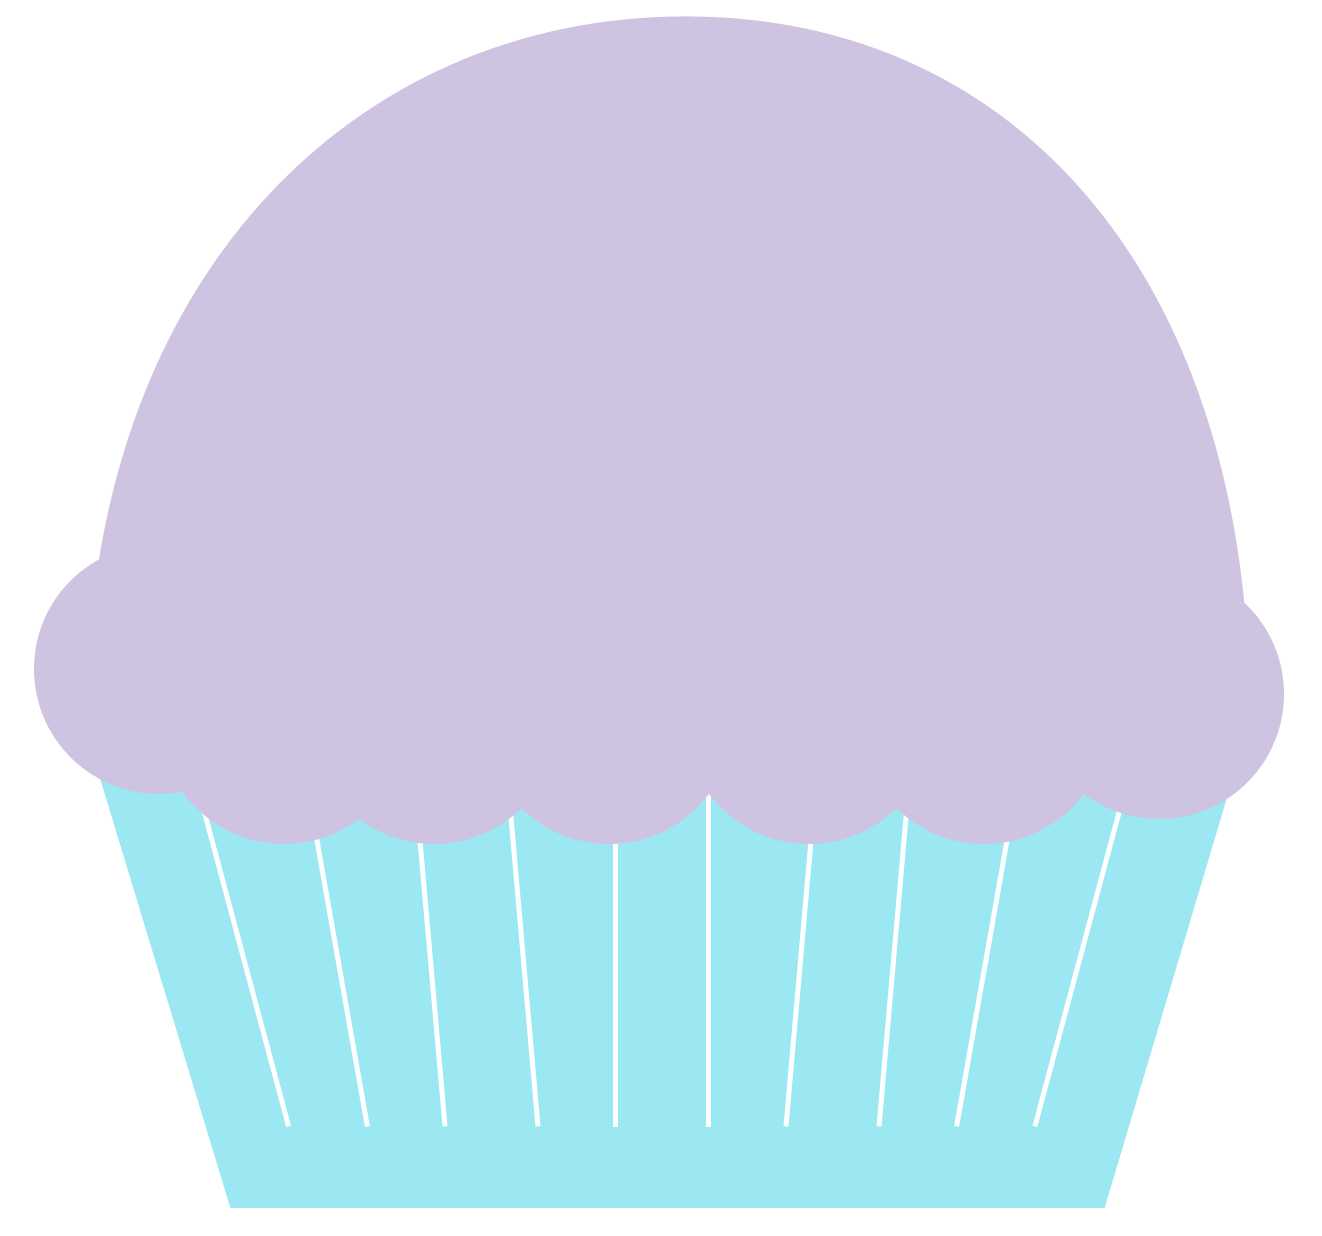 Purple Cupcake Clipart